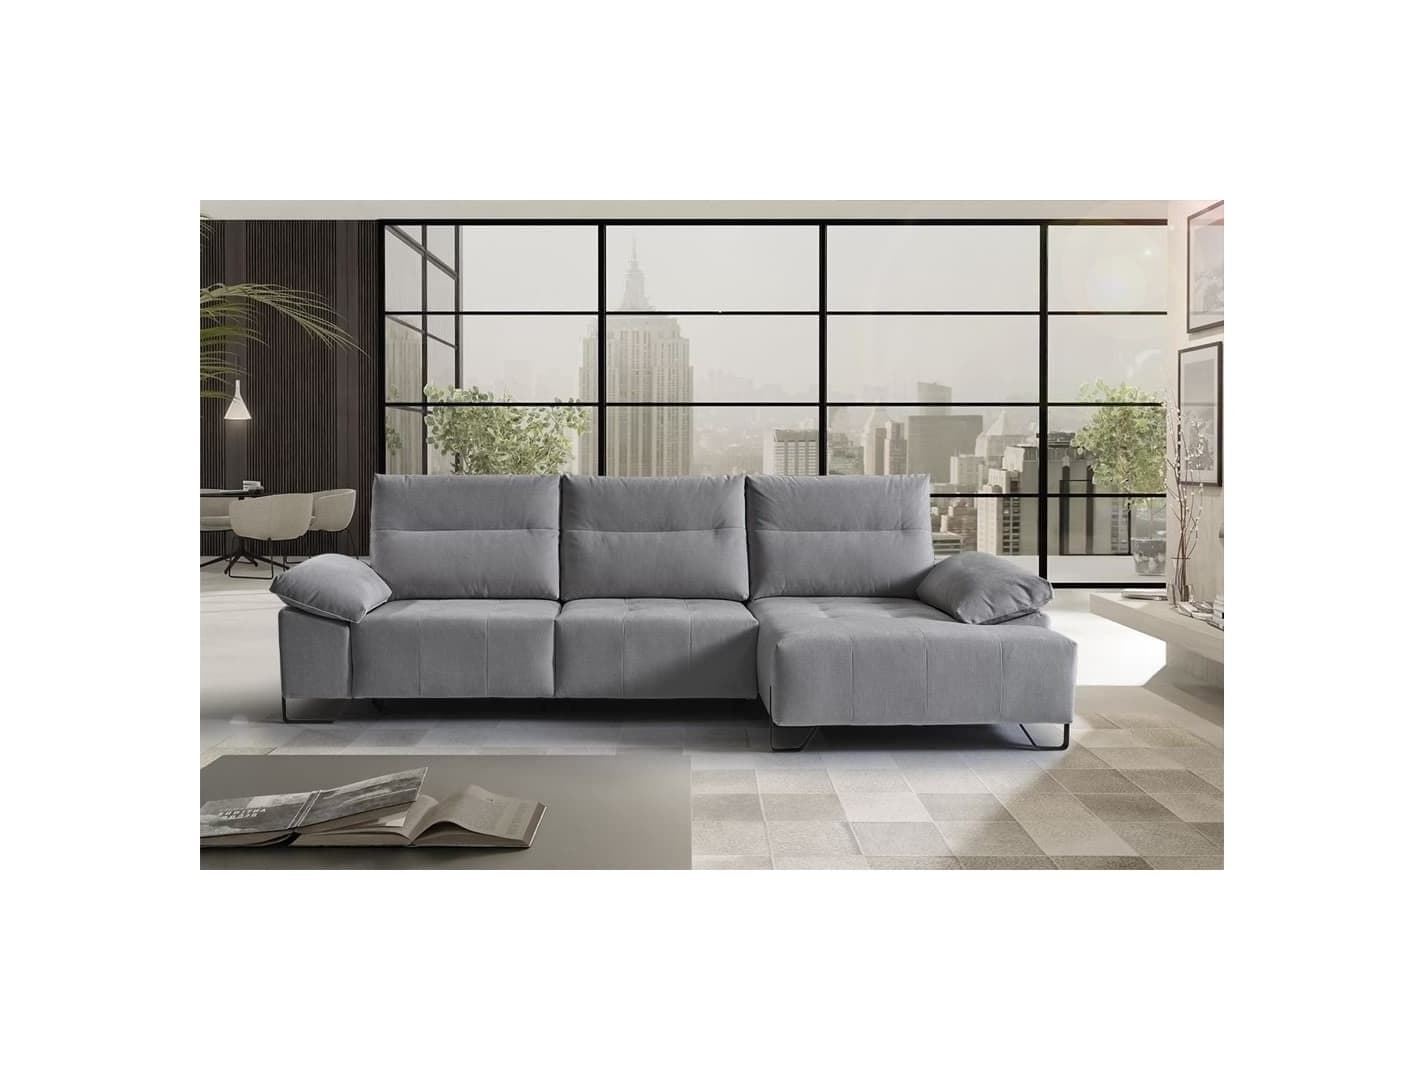 Sofa rinconera modelo Roma deslizante y reclinable